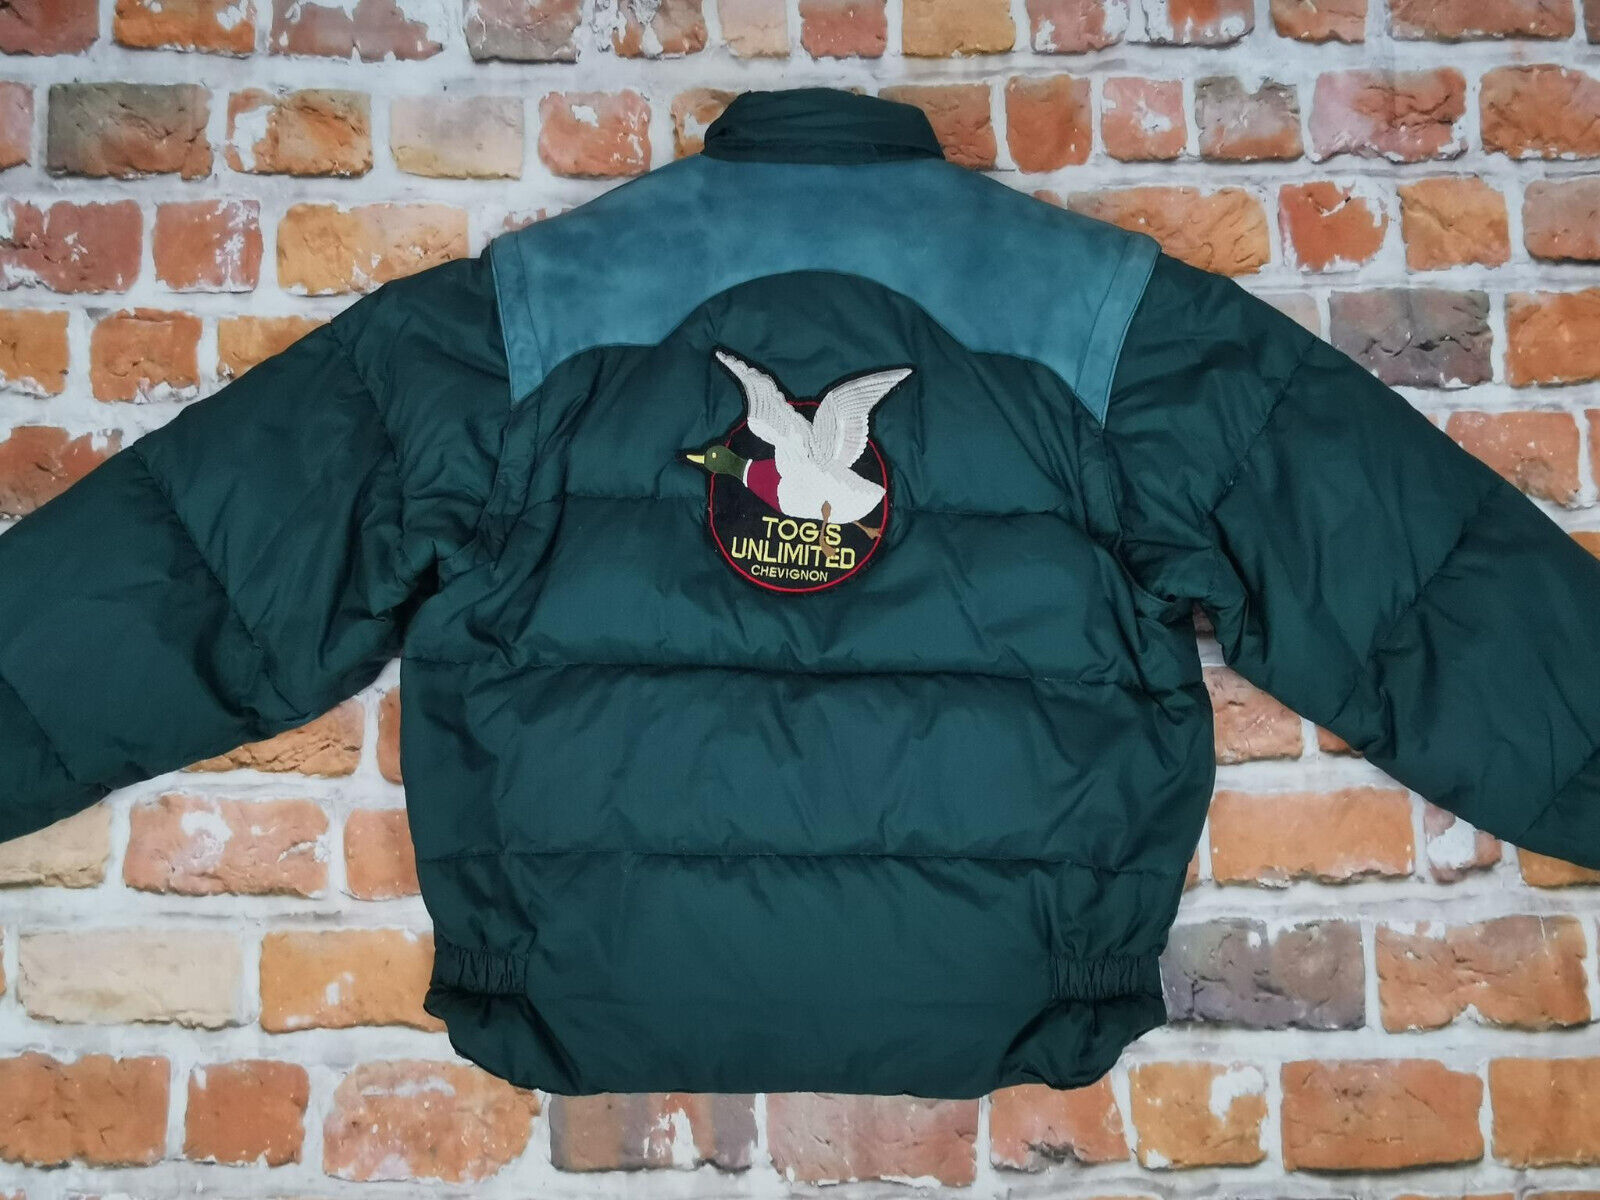 Chevignon Winter down Jacket Vest Tog ´S Unlimited Grass Green Size: Tip Top | eBay